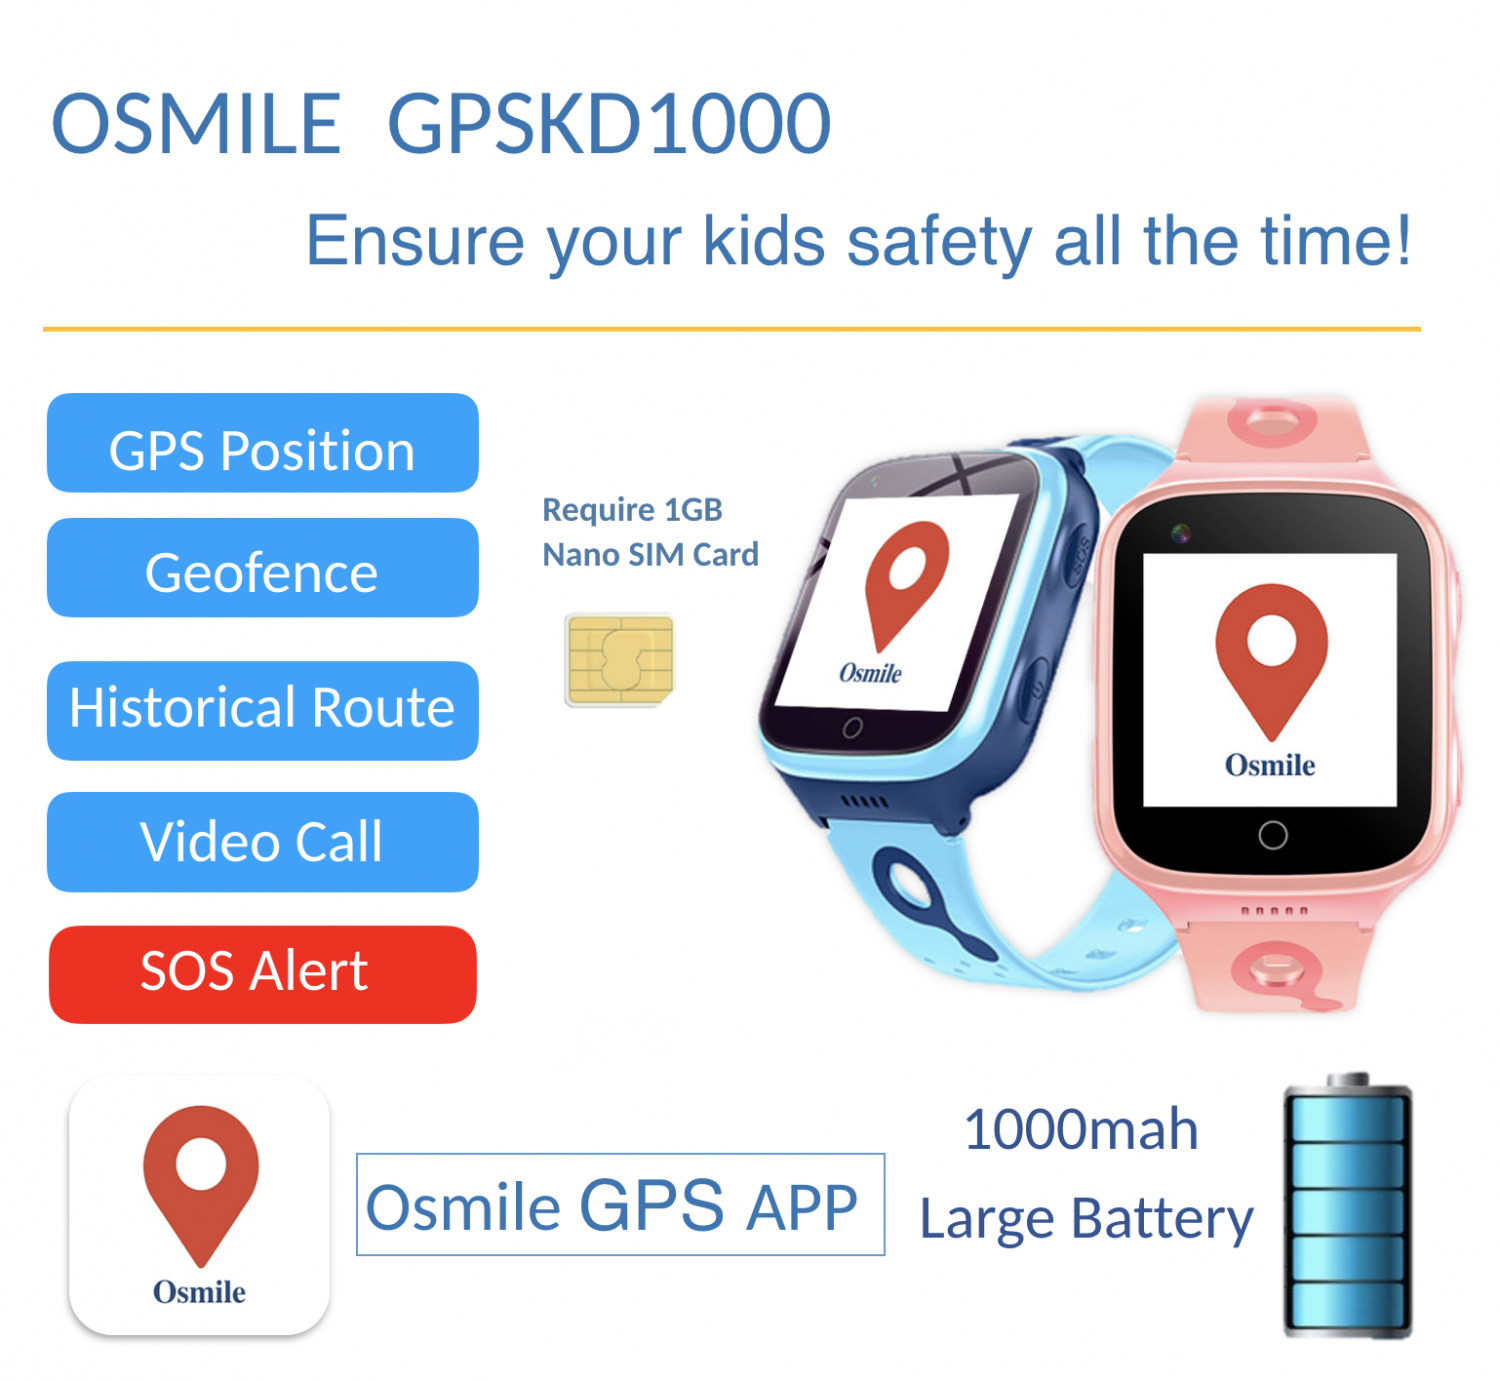 Osmile GPSKD1000 for kids - JC